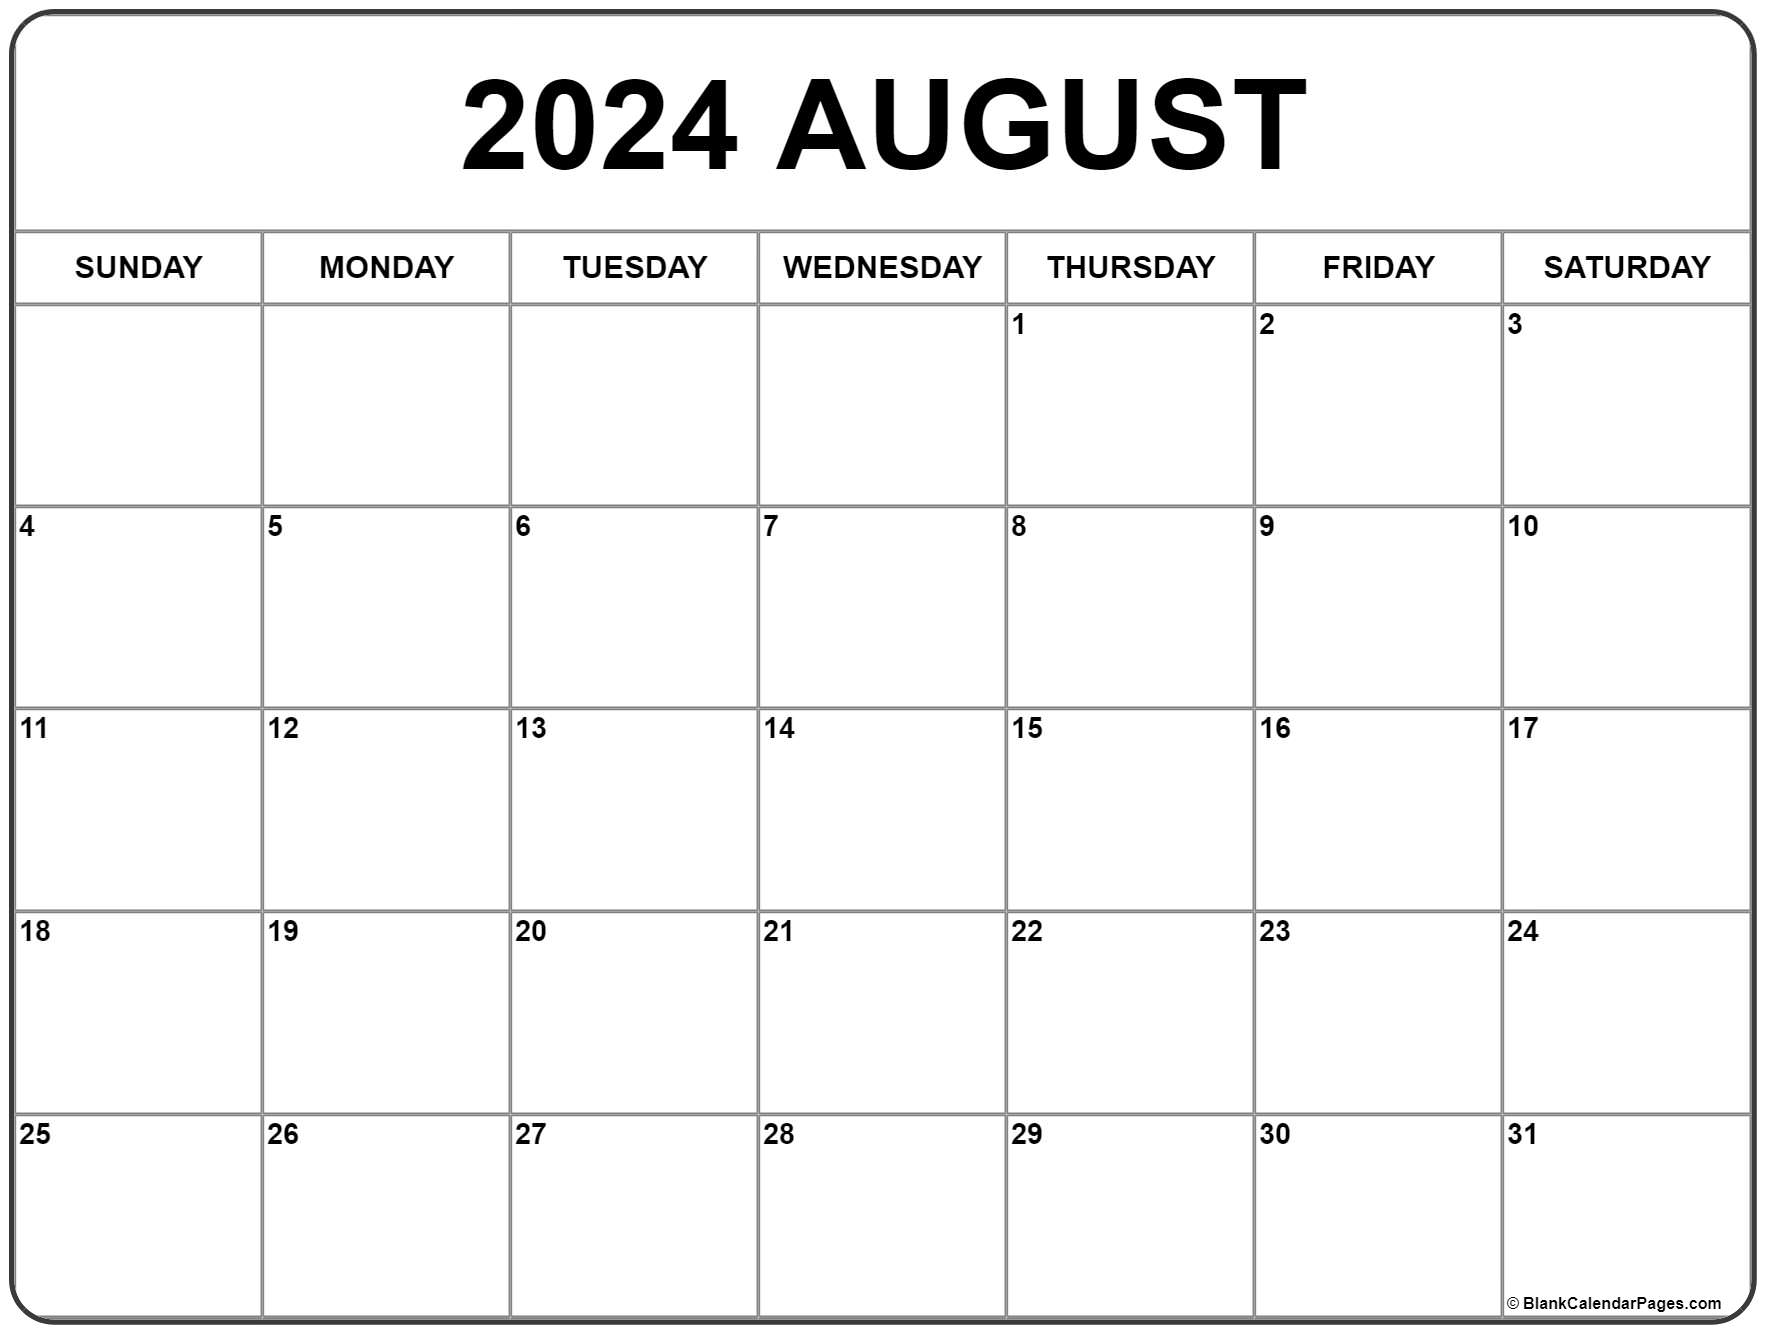 July 2021 Calendar Template August 2021 calendar | free printable monthly calendars